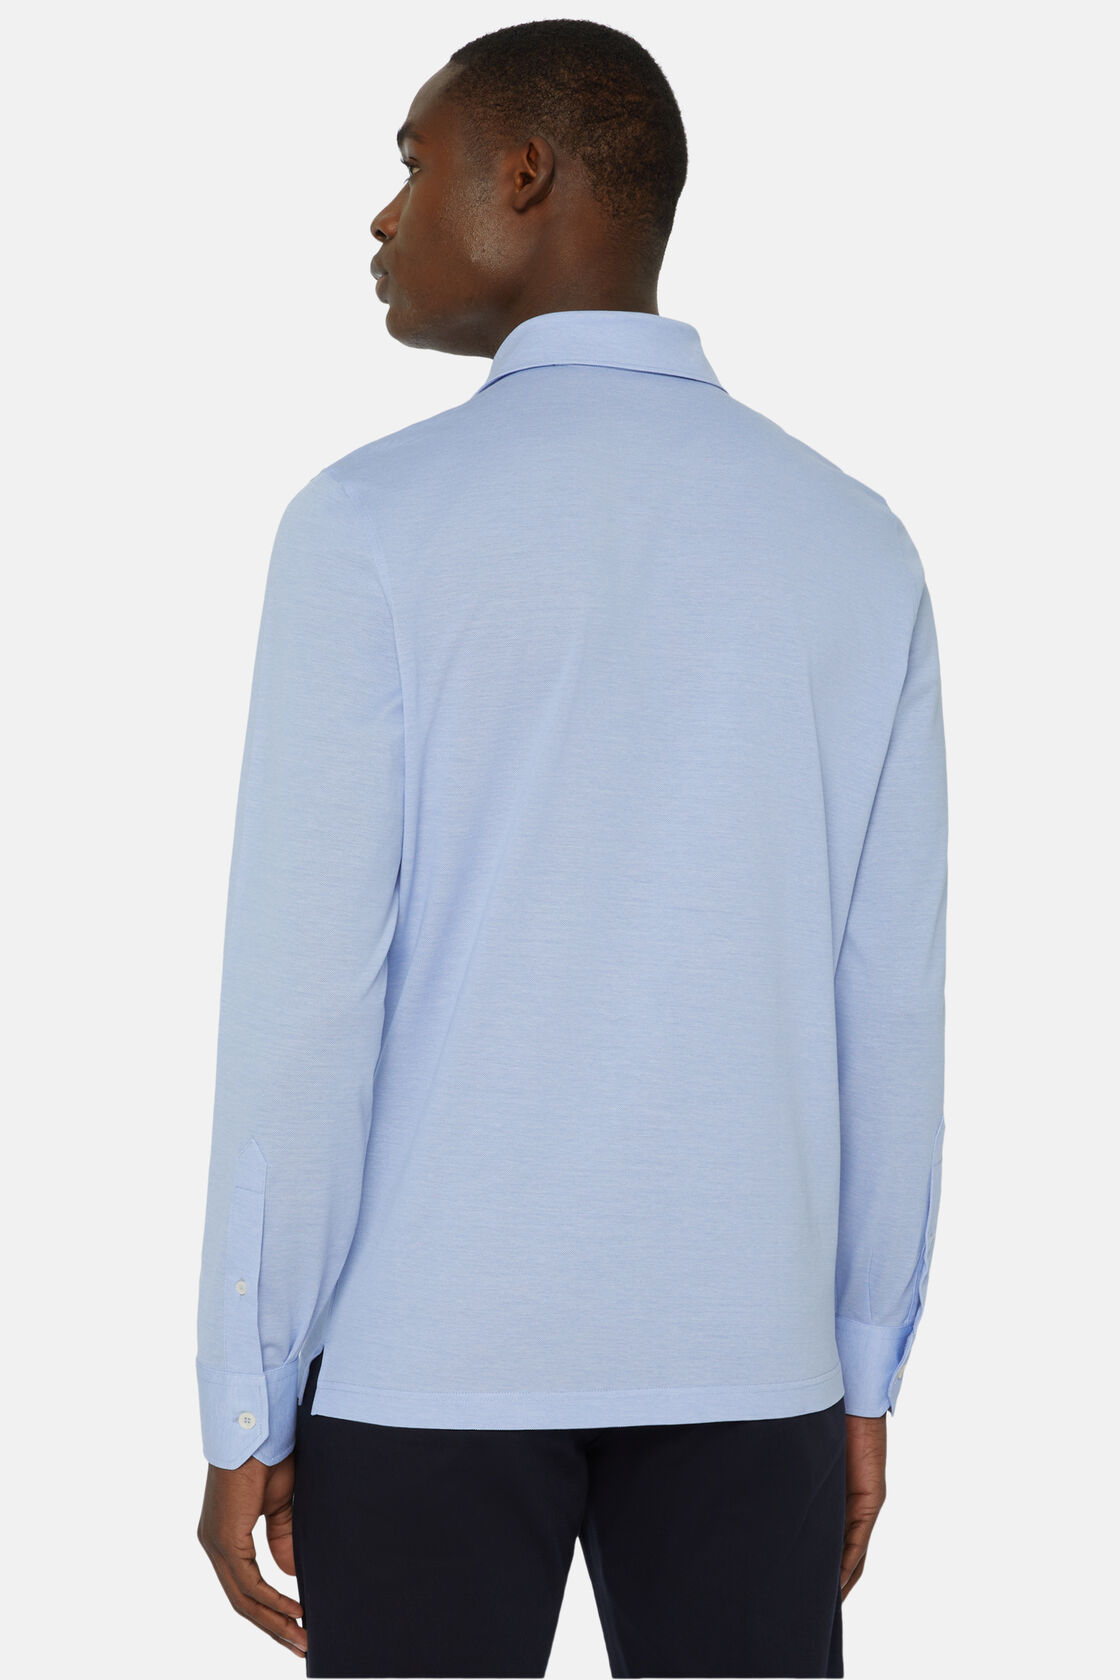 Slim Fit Polo Shirt in Filo Di Scozia Pique, Light Blu, hi-res